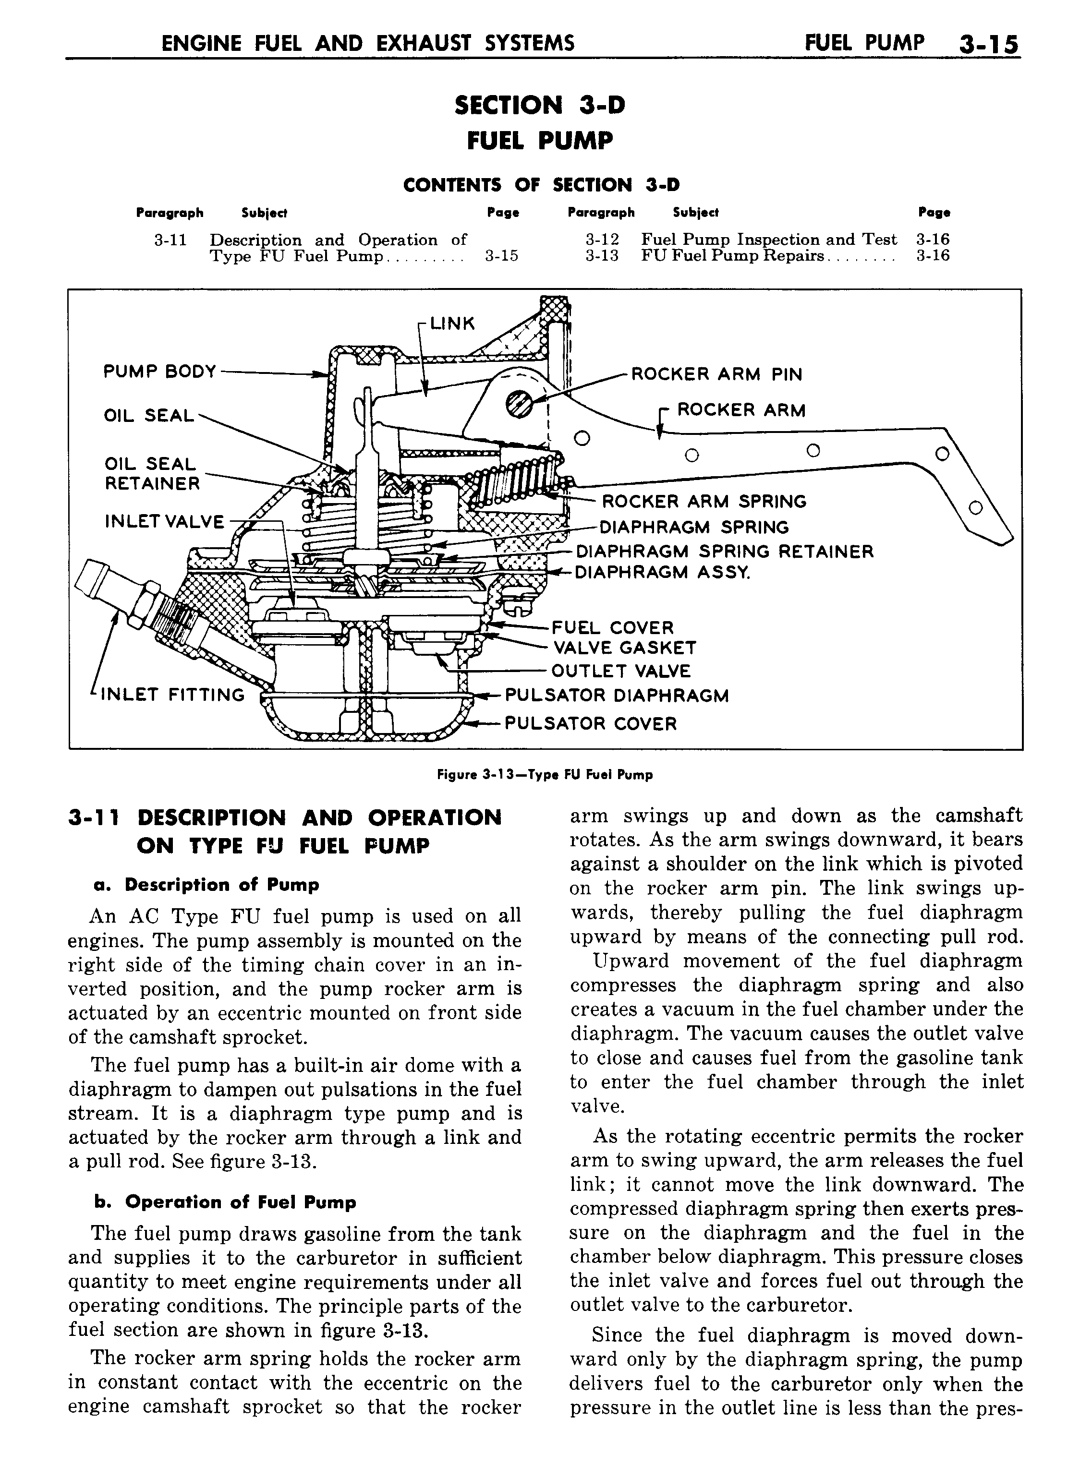 n_04 1957 Buick Shop Manual - Engine Fuel & Exhaust-015-015.jpg